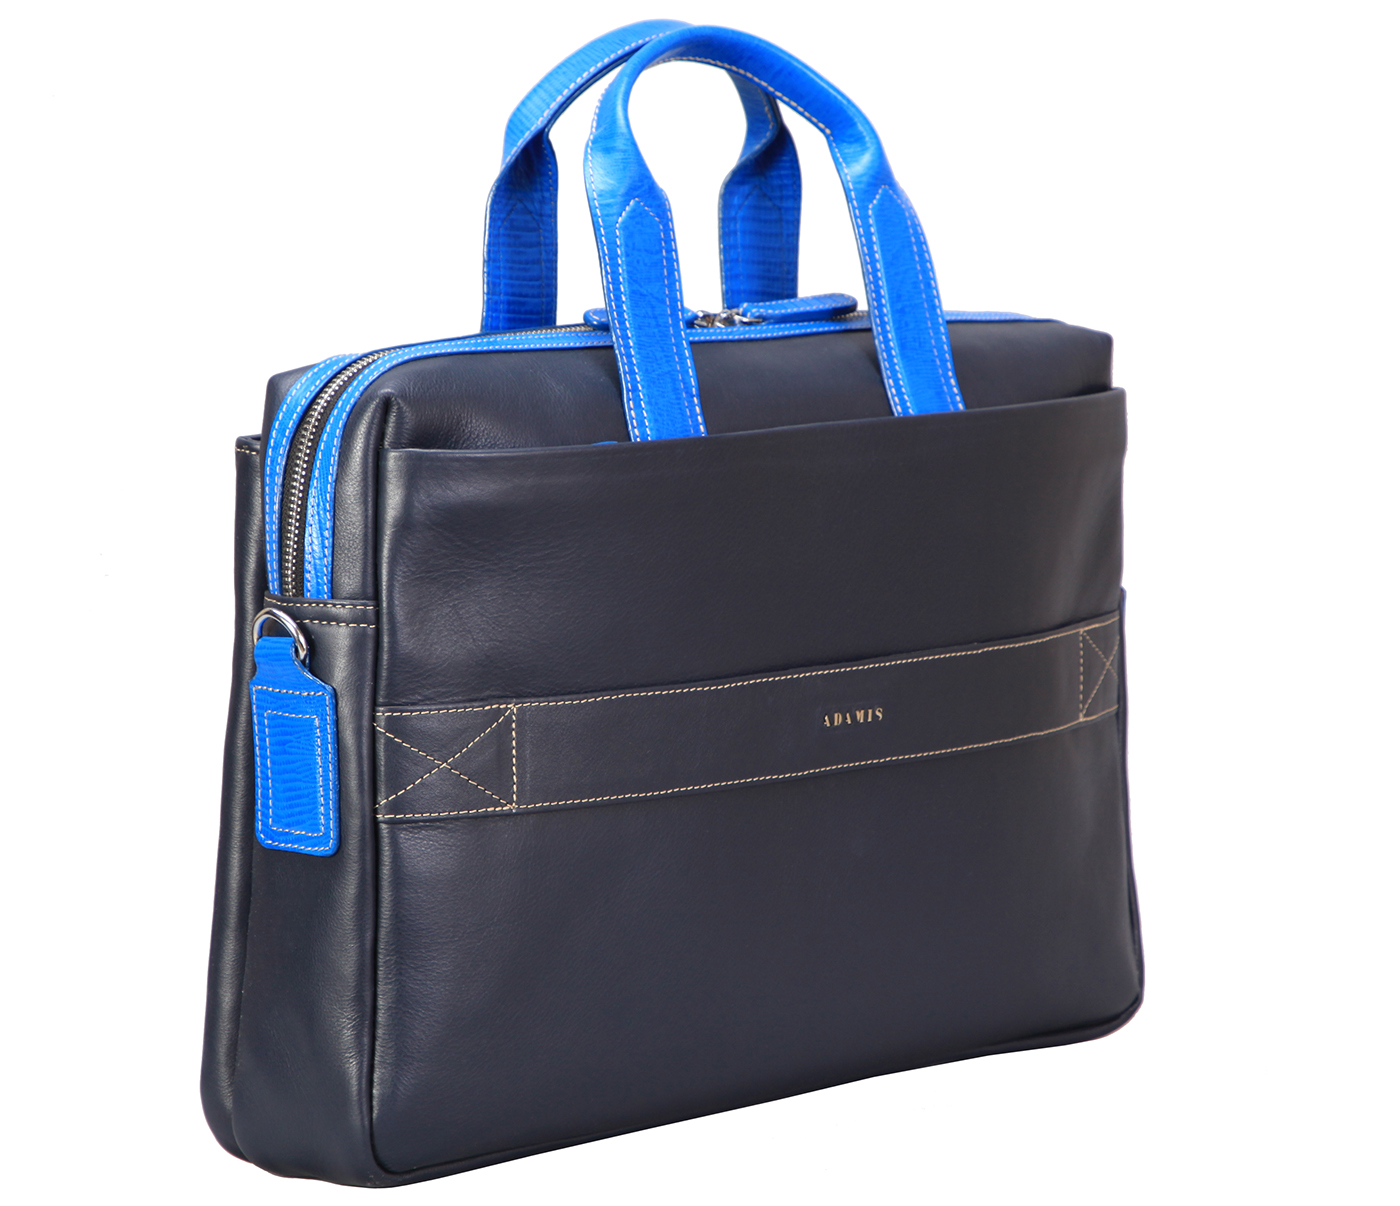 F72-Liam-Laptop, portfolio office executive bag in Genuine Leather - Blue